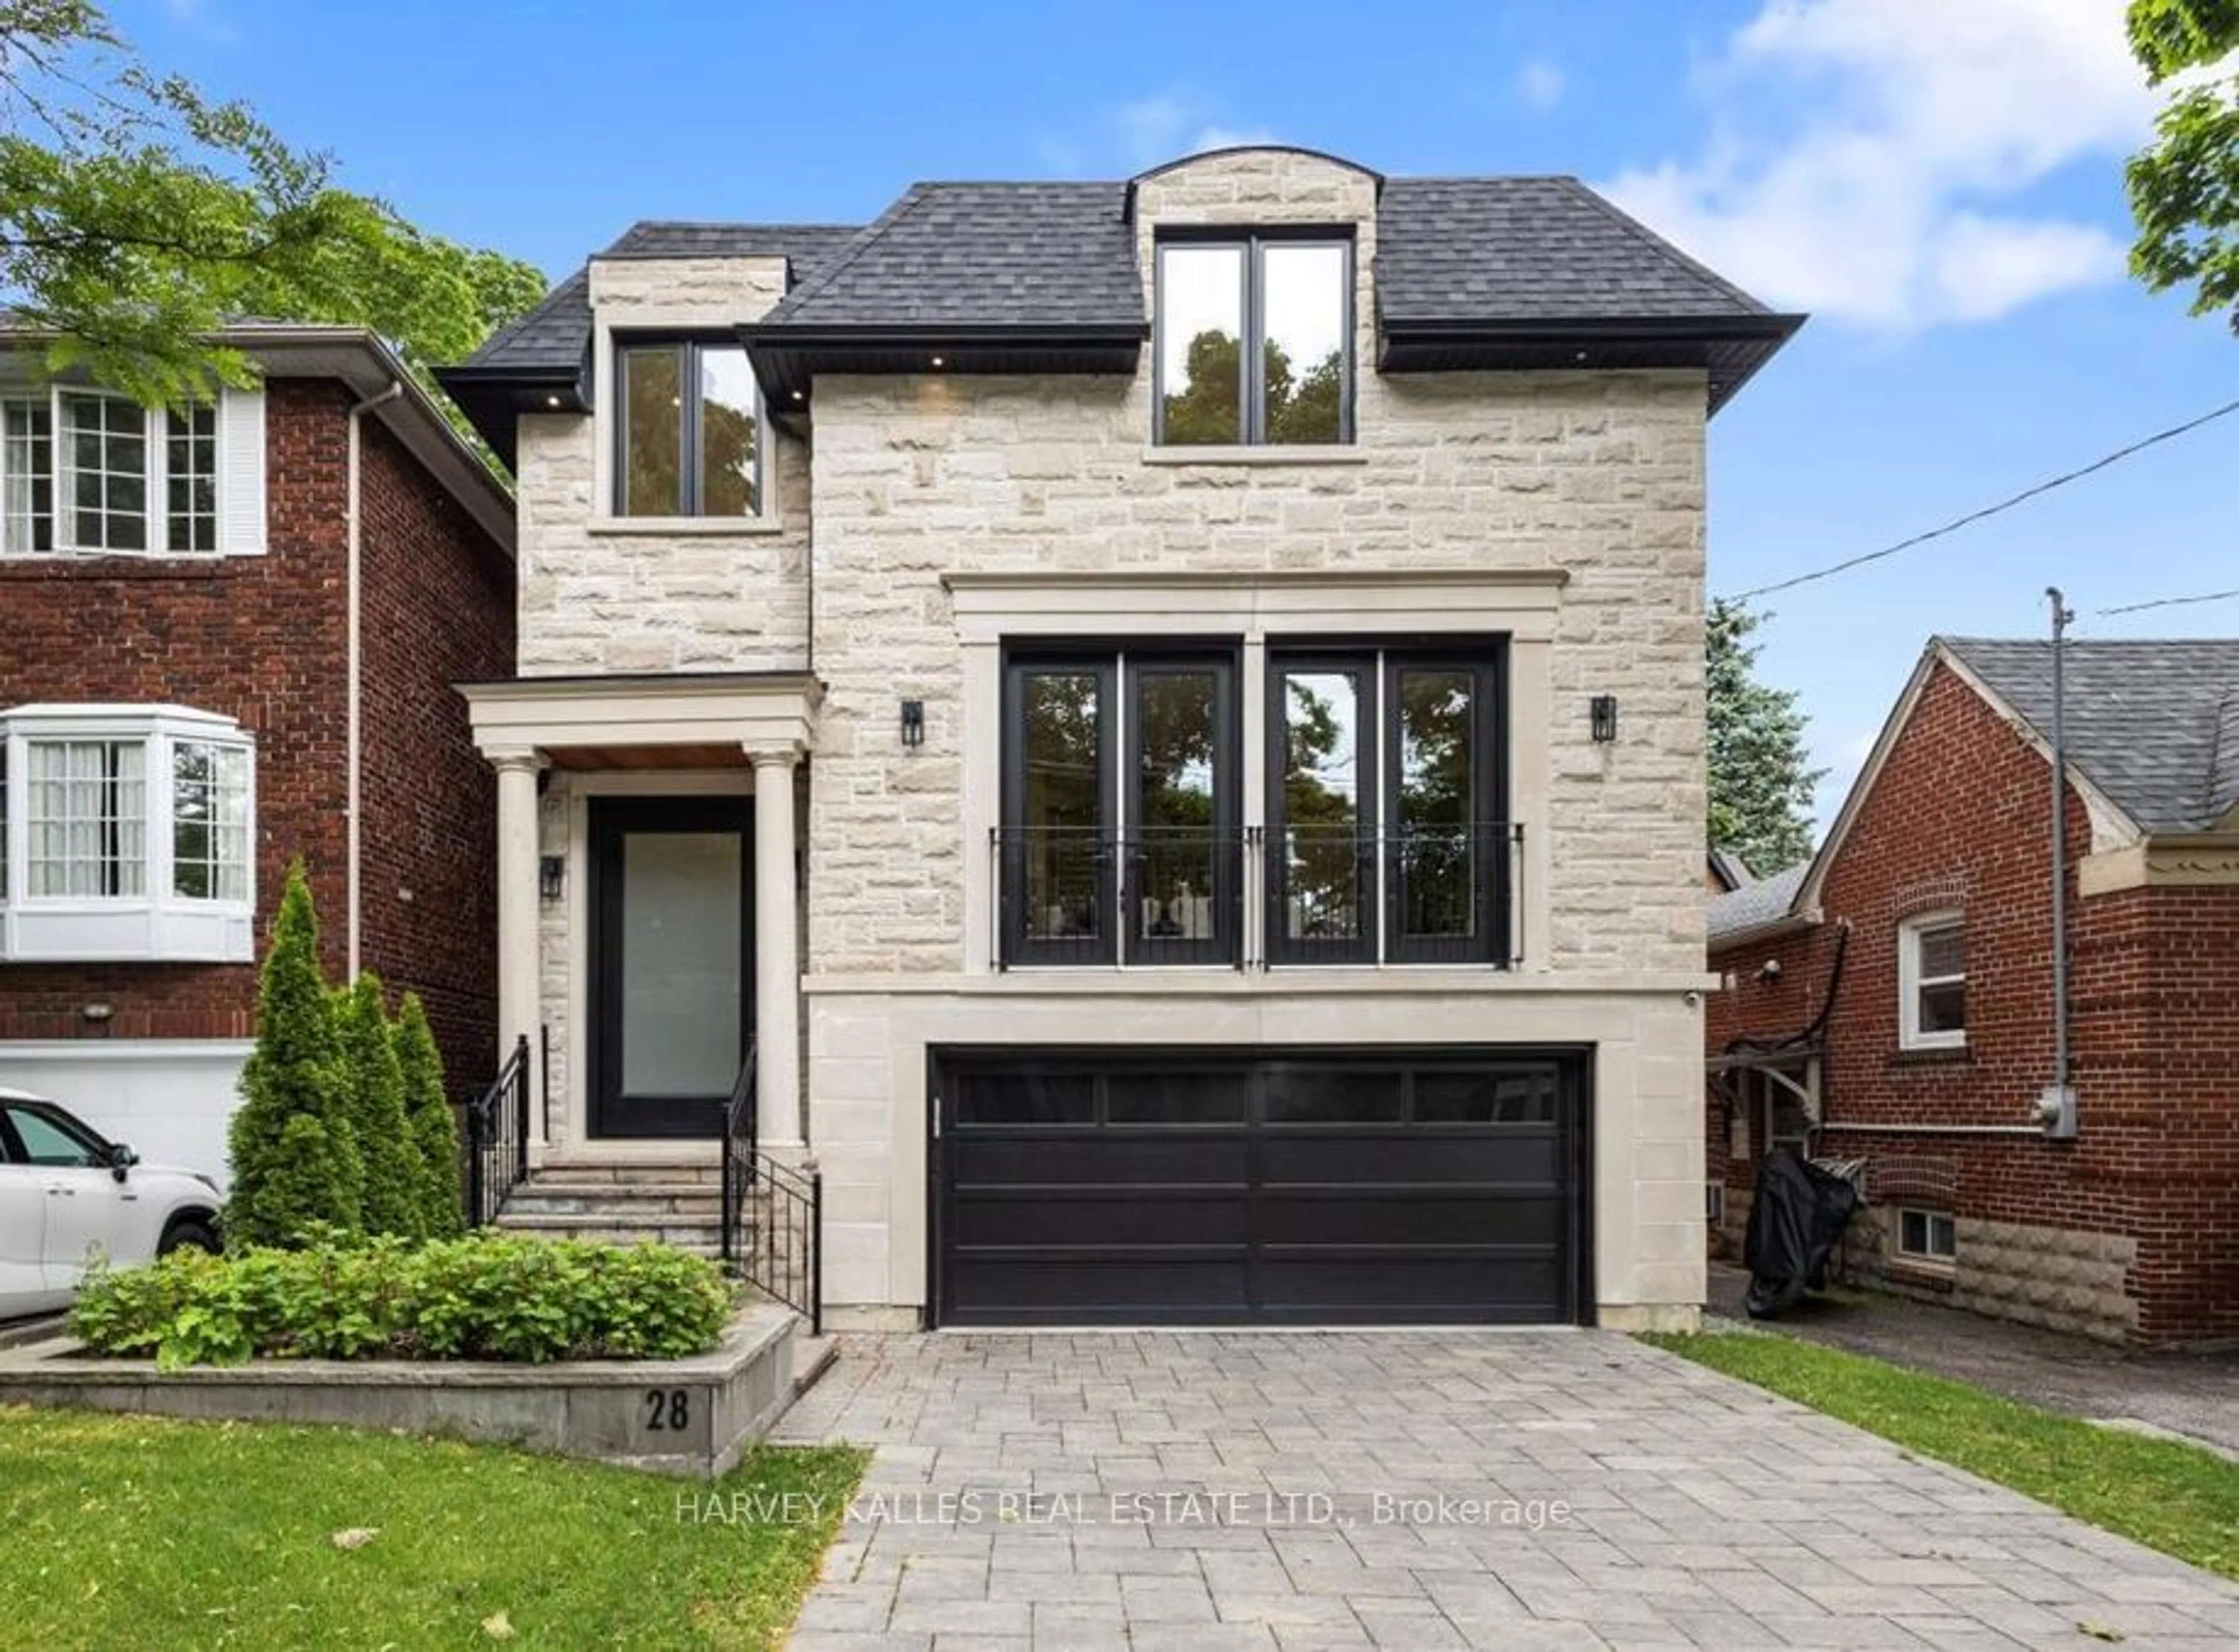 Home with brick exterior material for 28 Southvale Dr, Toronto Ontario M4G 1G3